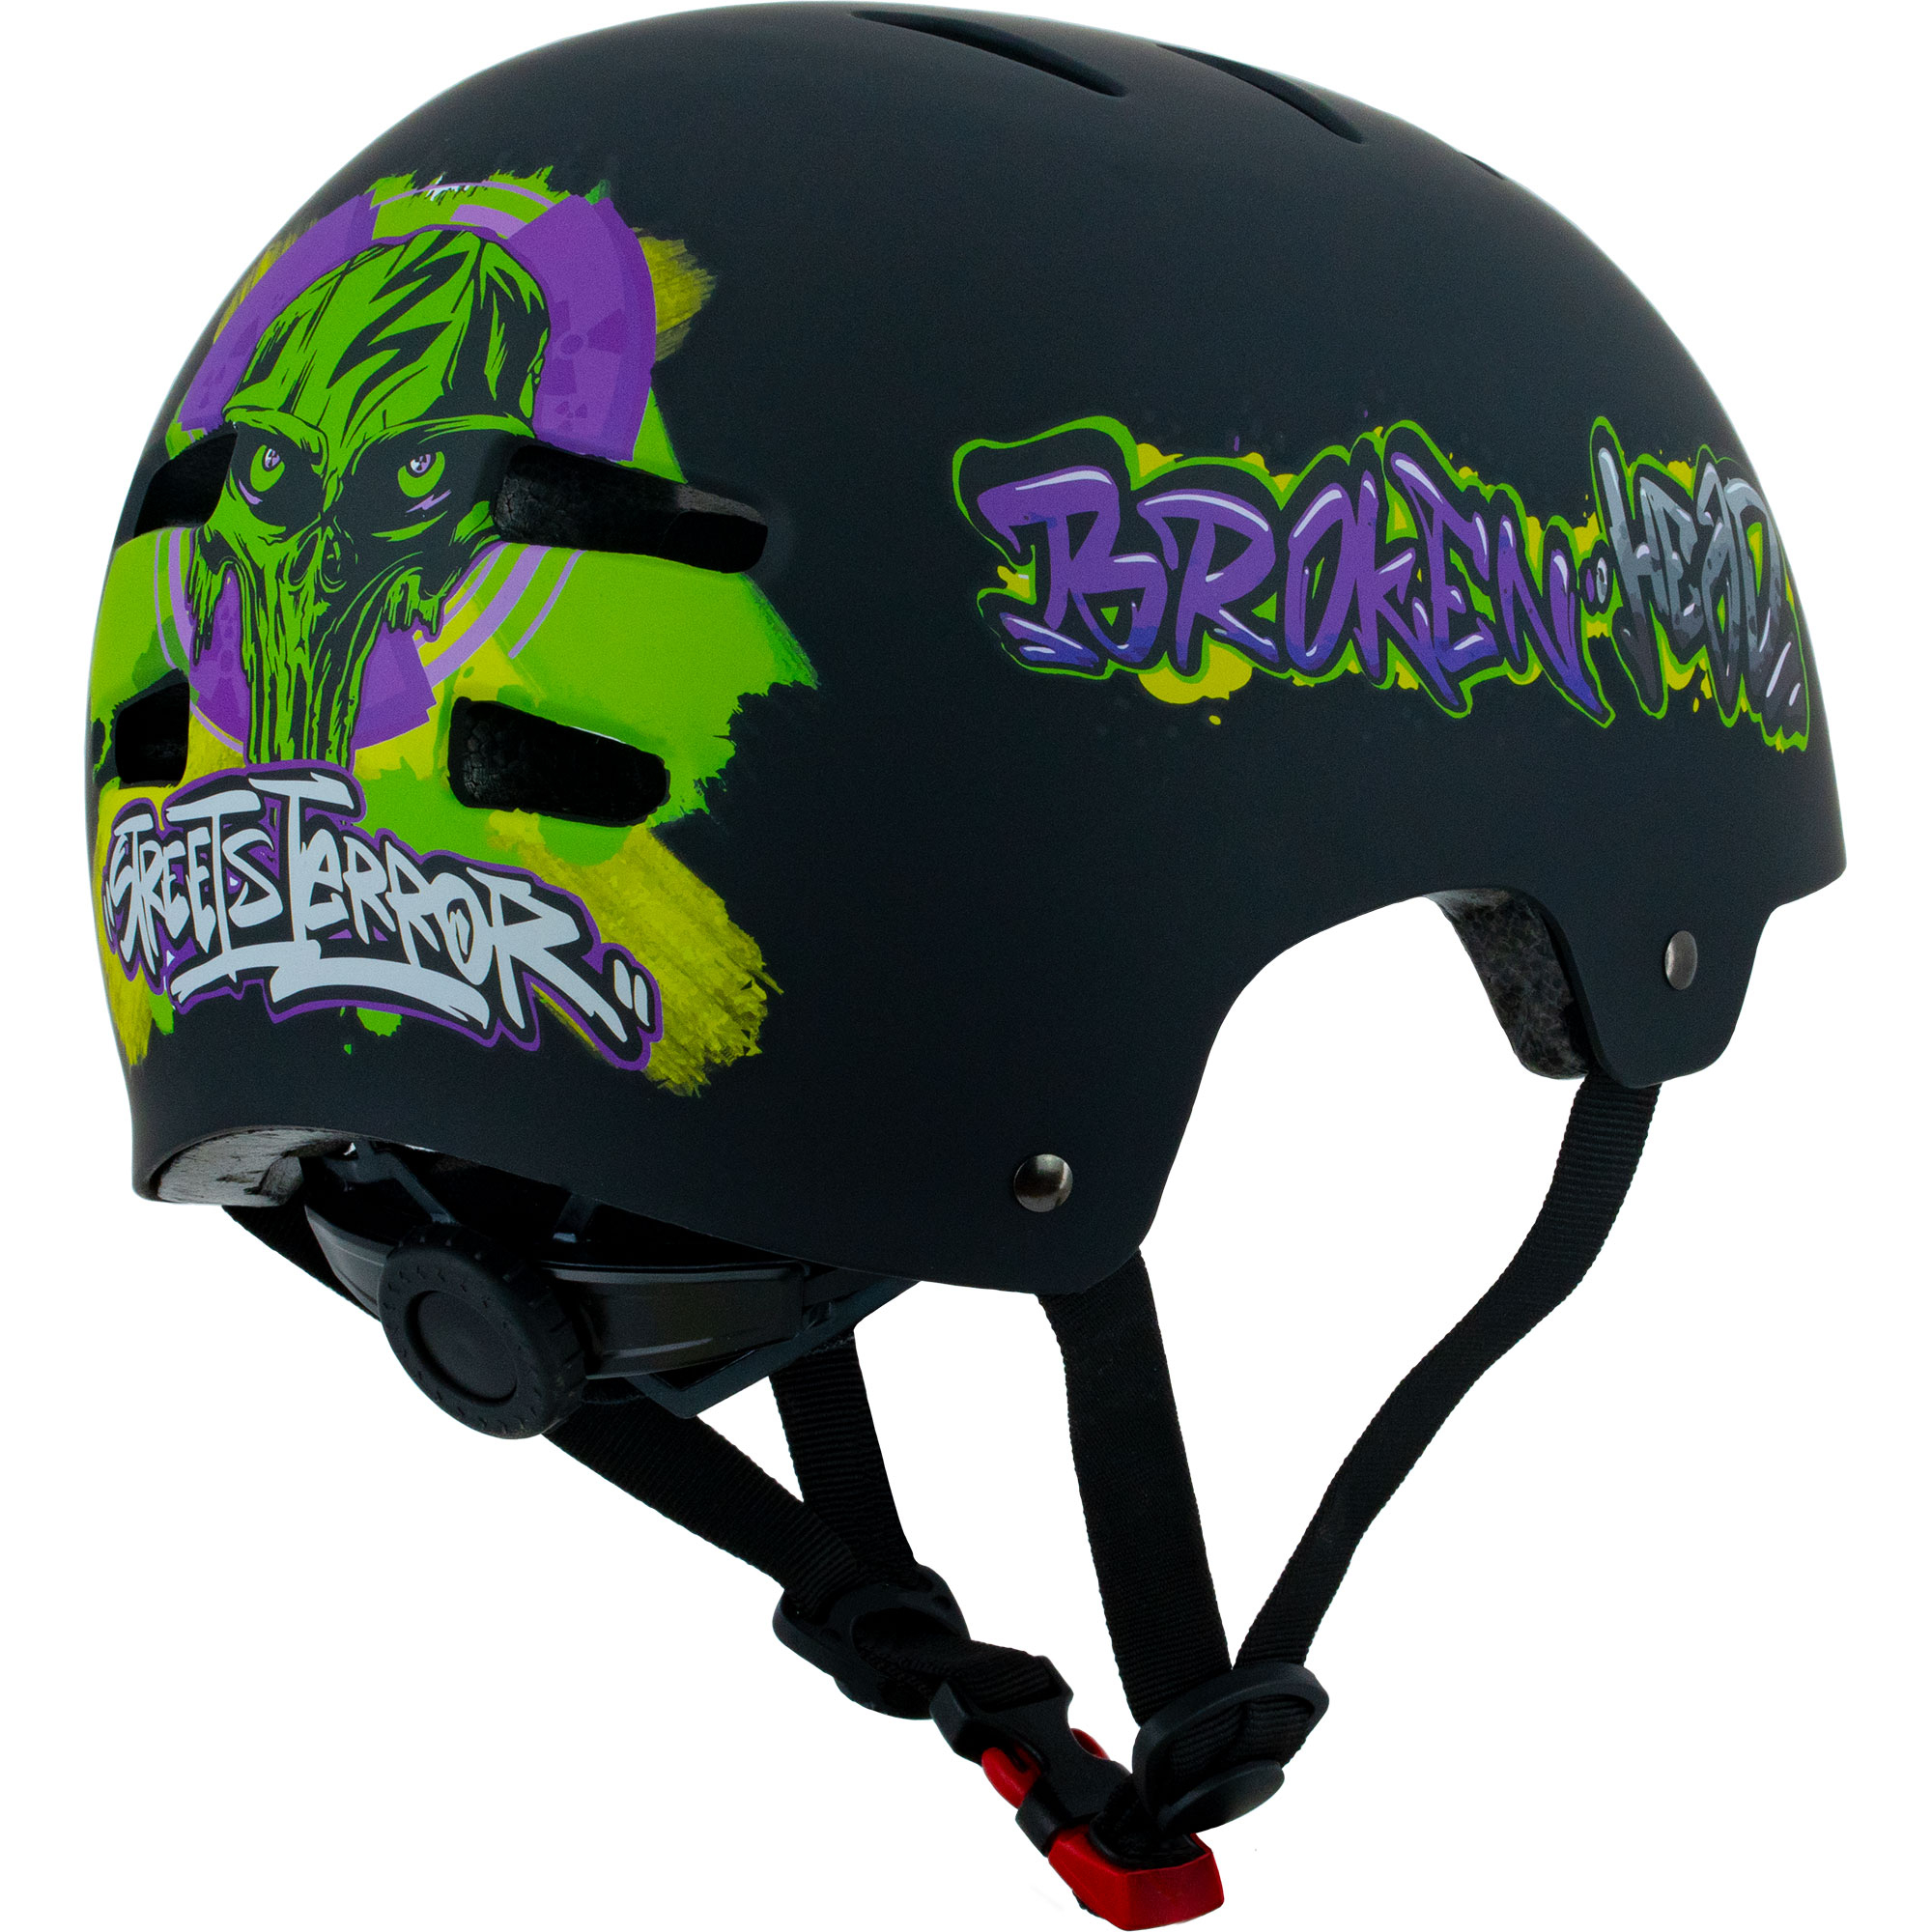 Broken Head casque de skate & casque de VTT Street Terror